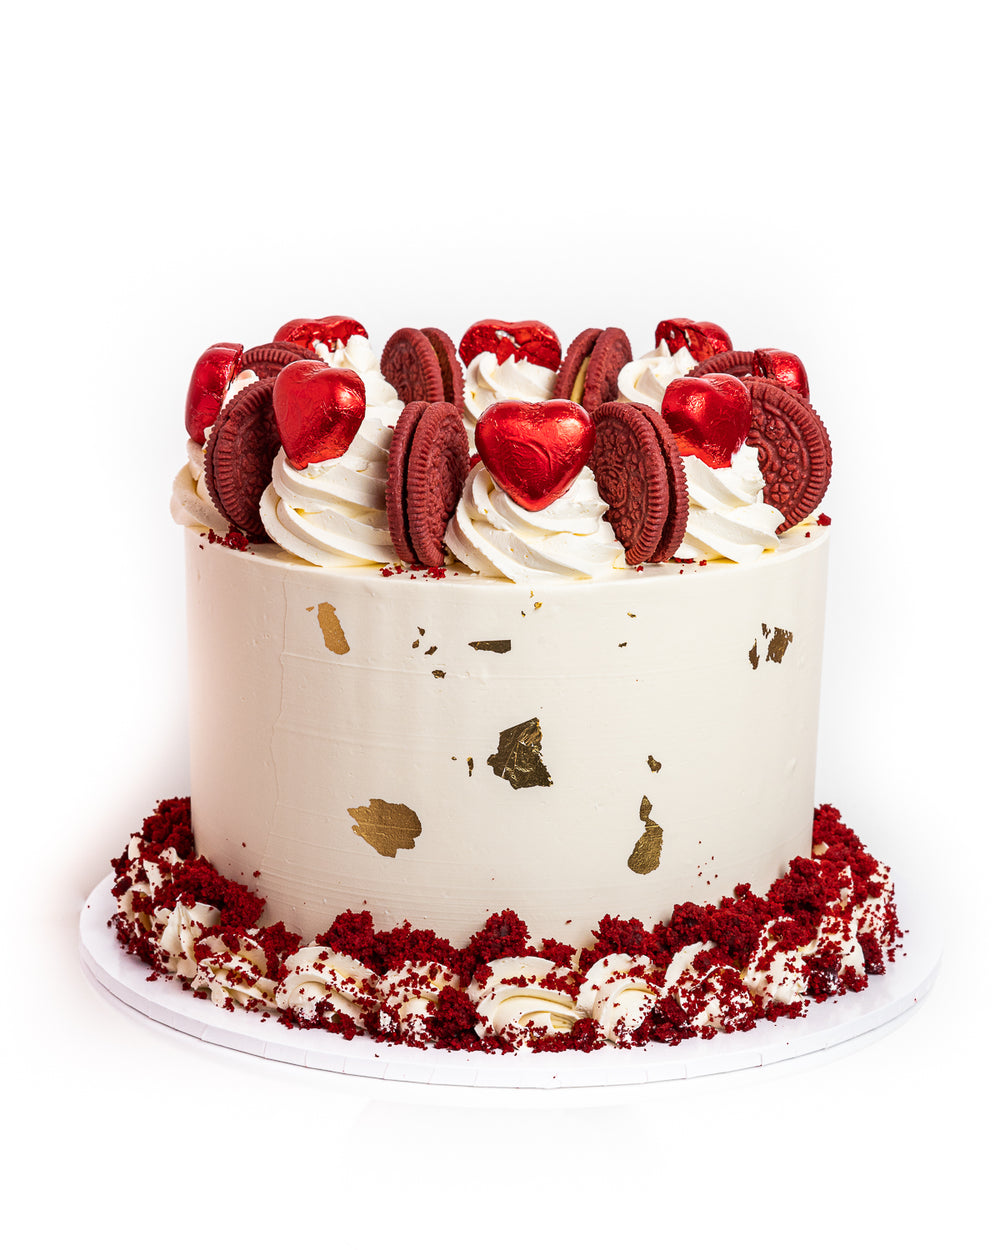 Order Cake online in Gurgaon for Half Birthdays | Best Cake Shop in Gurgaon